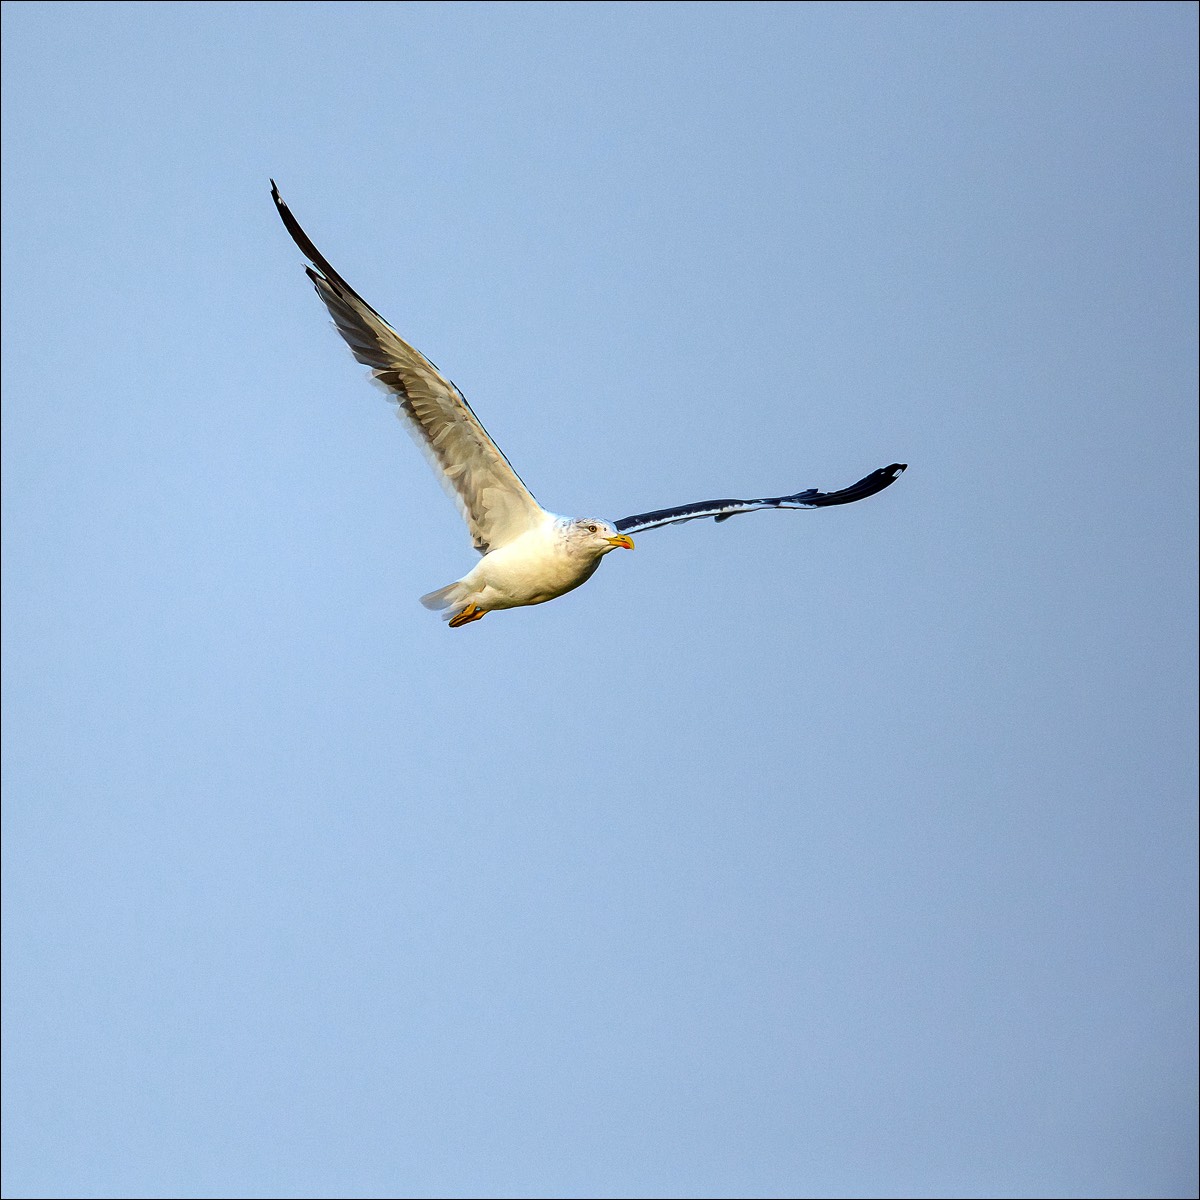 Lesser Black-backed Gull (Kleine Mantelmeeuw) - Uitkerke (Belgium) - 19/09/21